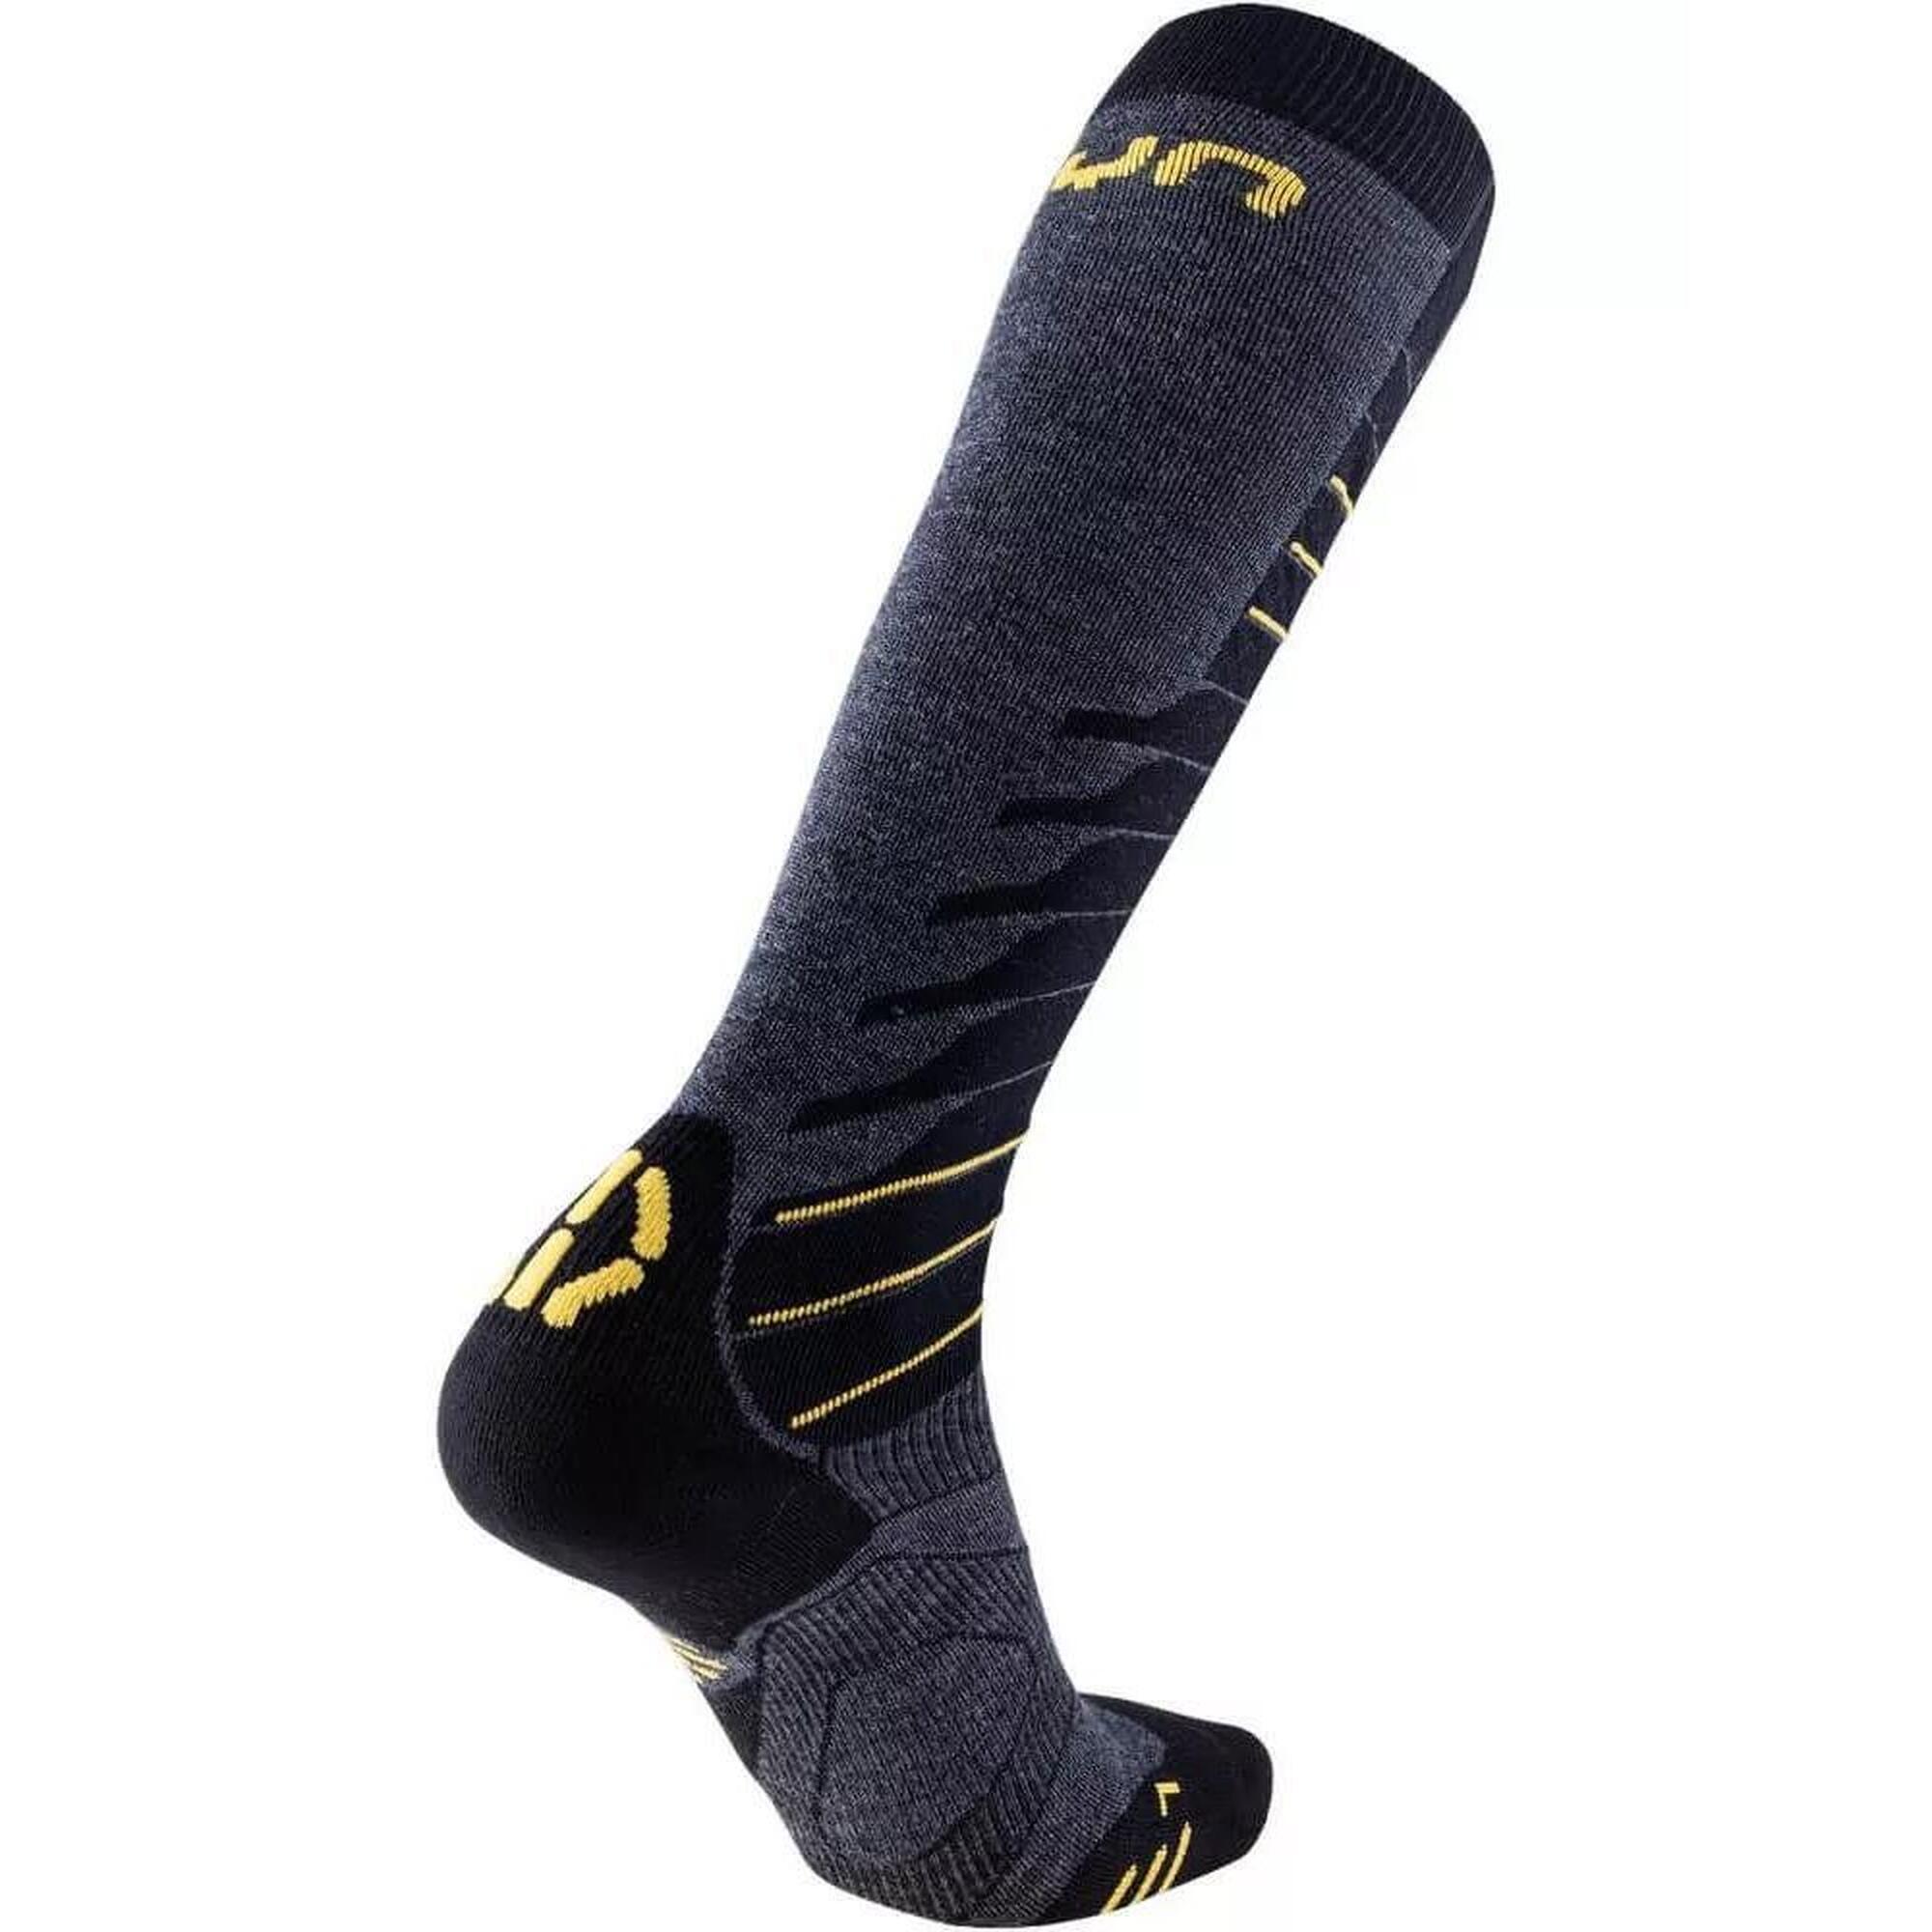 Ciorapi de schi Man Ski Ultra Fit Socks - gri barbati